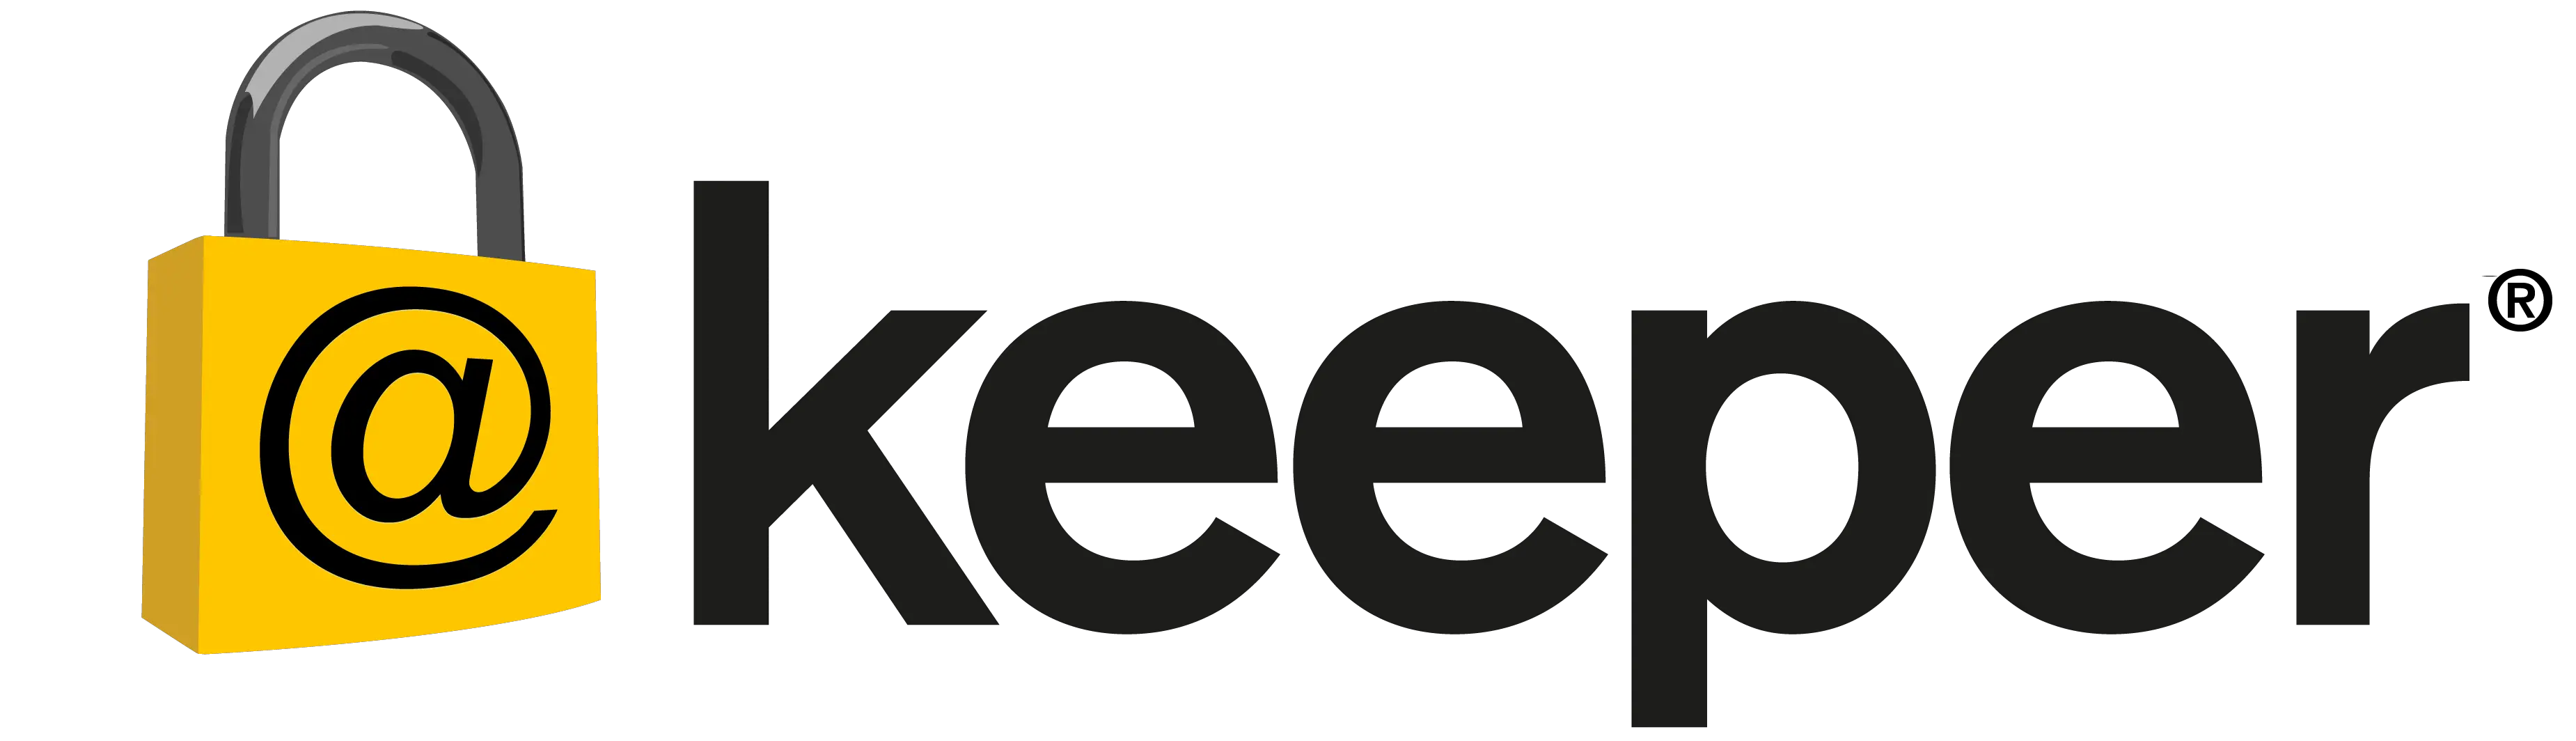 keeper-logo-2014